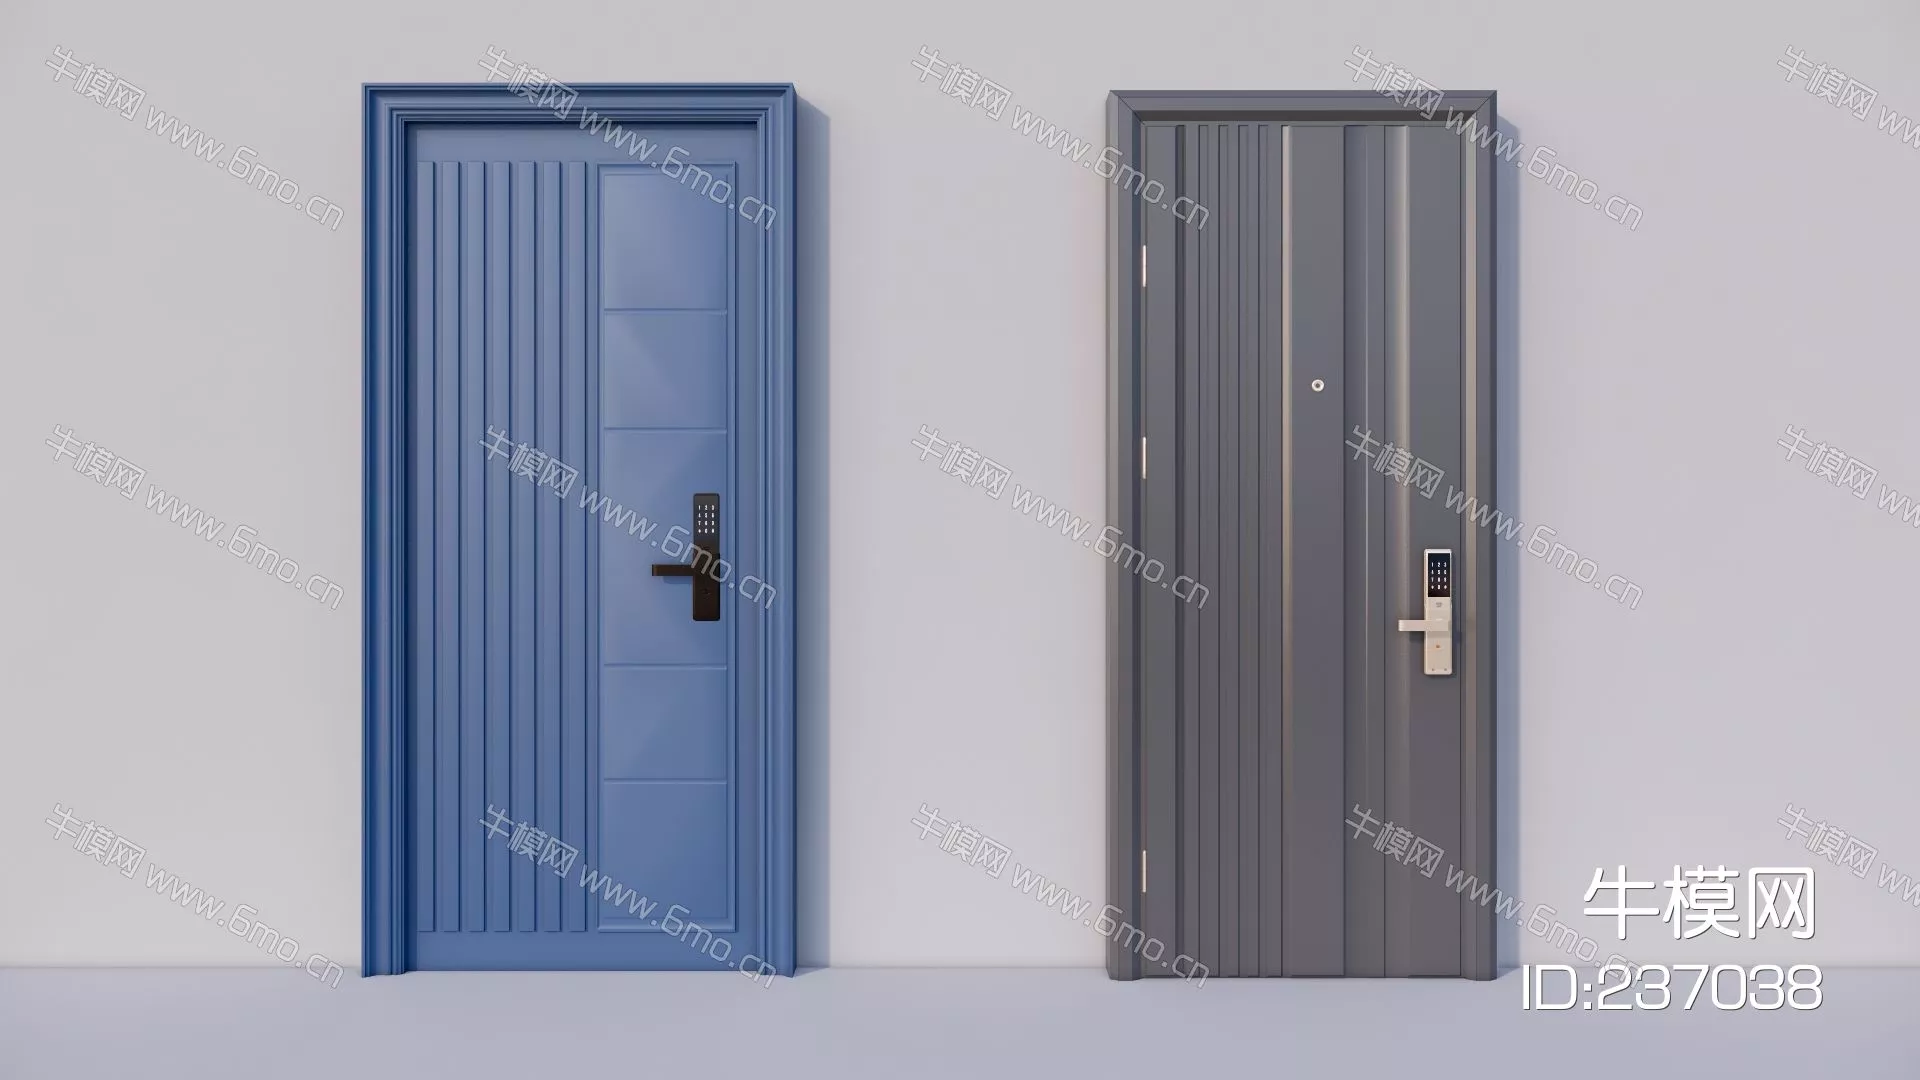 MODERN DOOR AND WINDOWS - SKETCHUP 3D MODEL - ENSCAPE - 237038